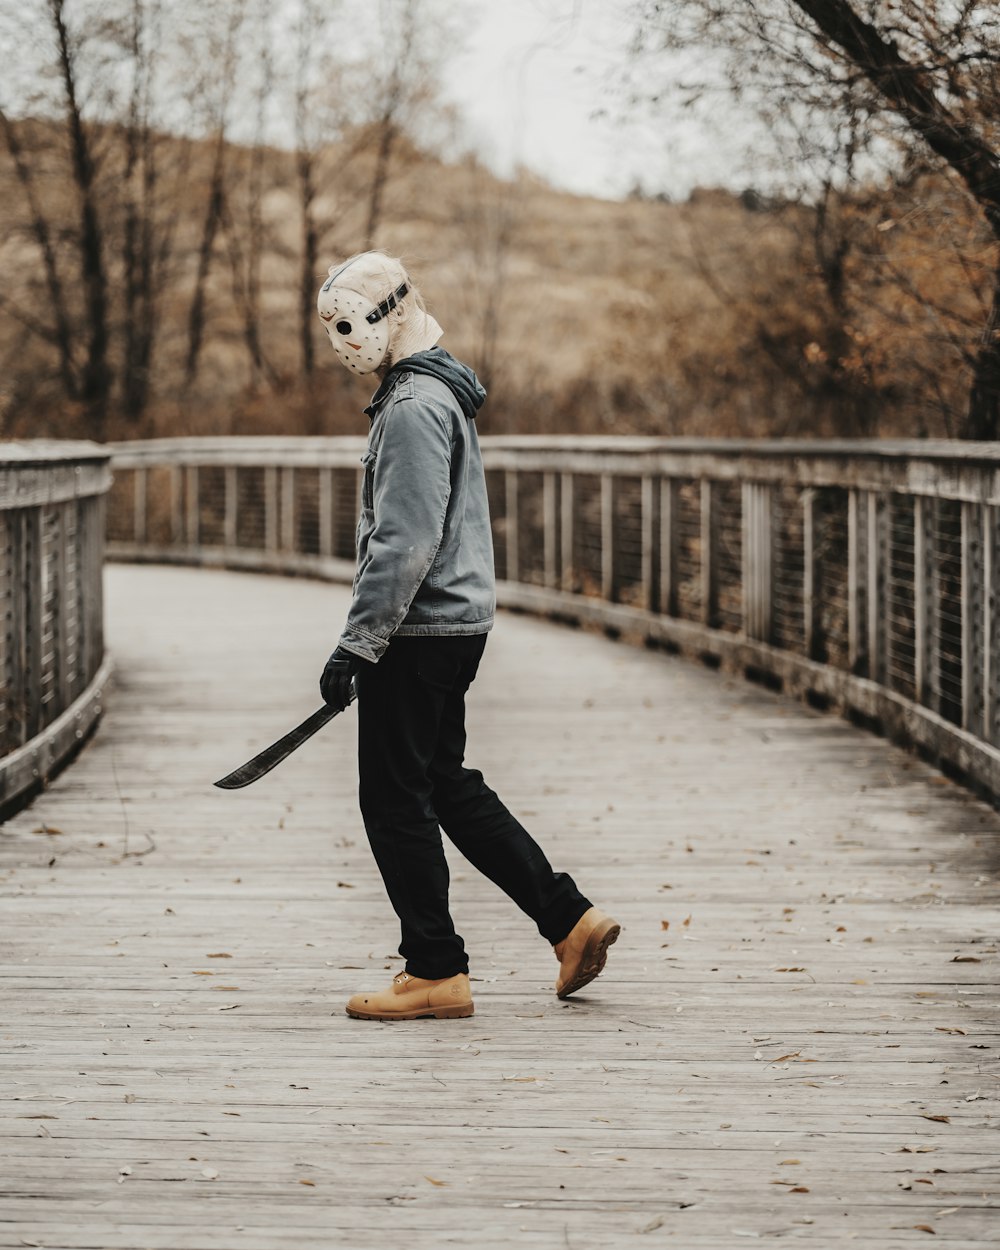 a person walking across a bridge wearing a mask